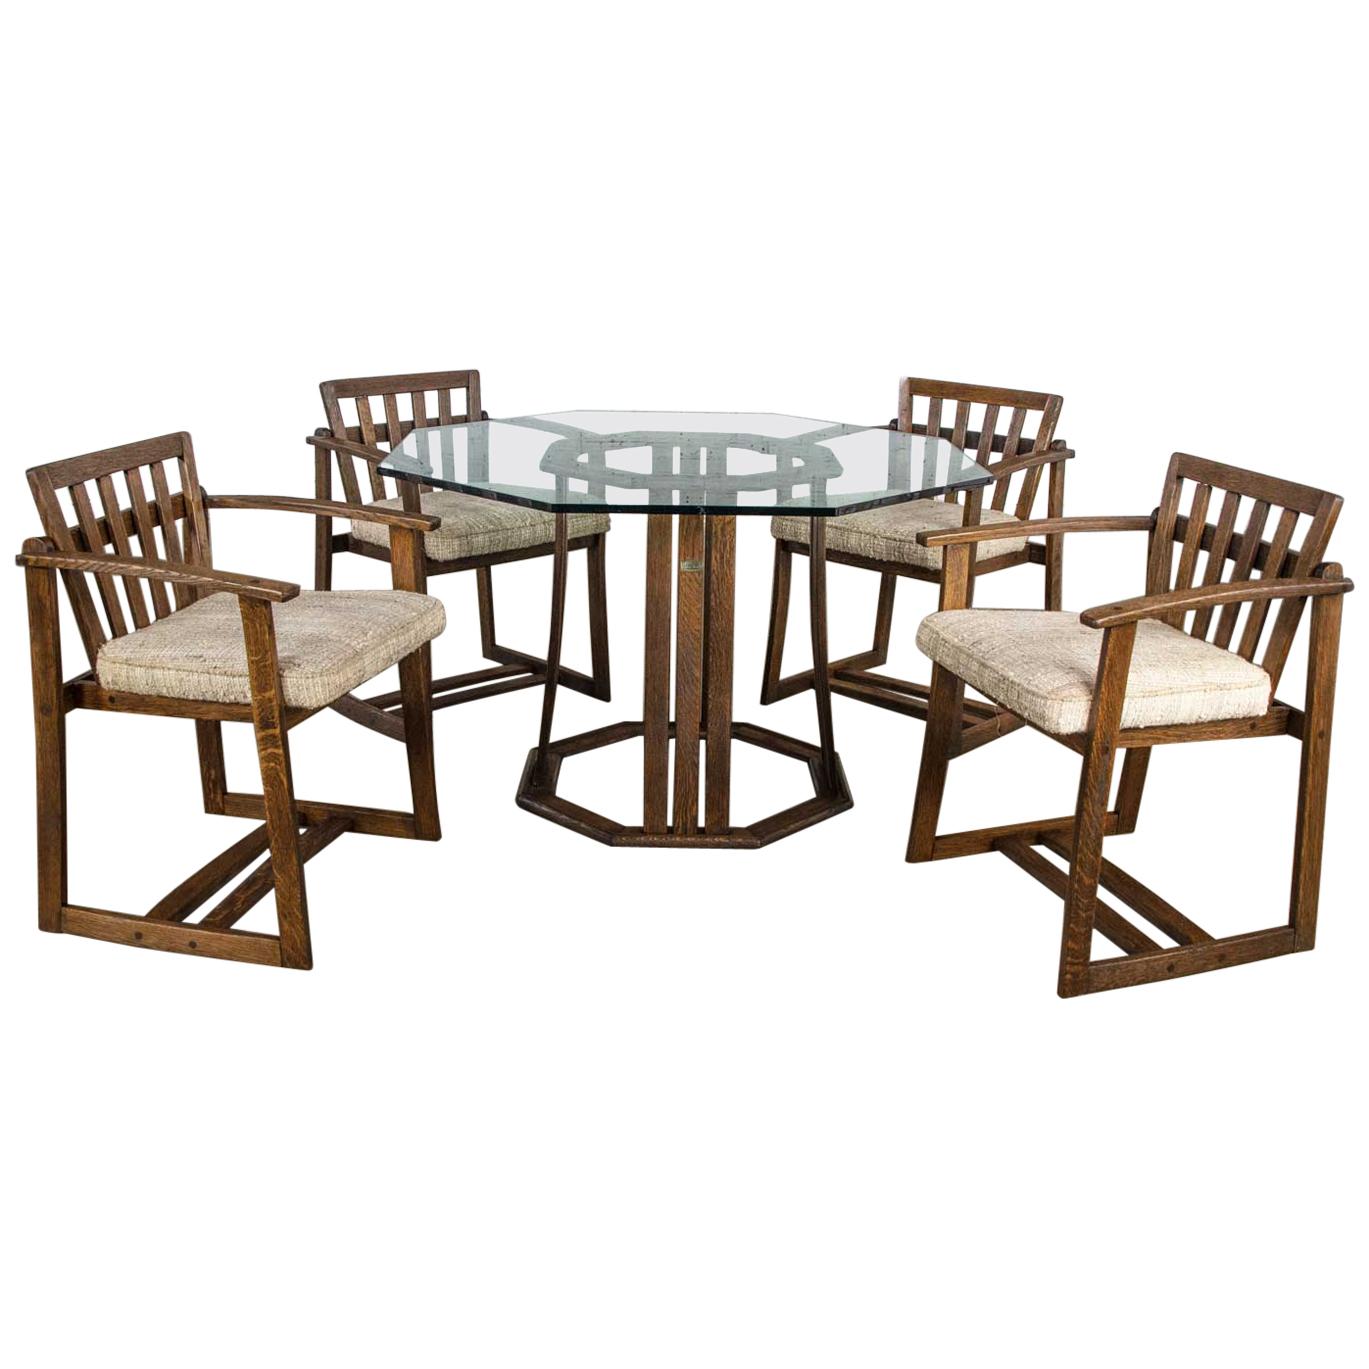 StavOak Dining Game Table & 4 Chairs Jack Daniels’ Barrel Staves Jobie G Redmond